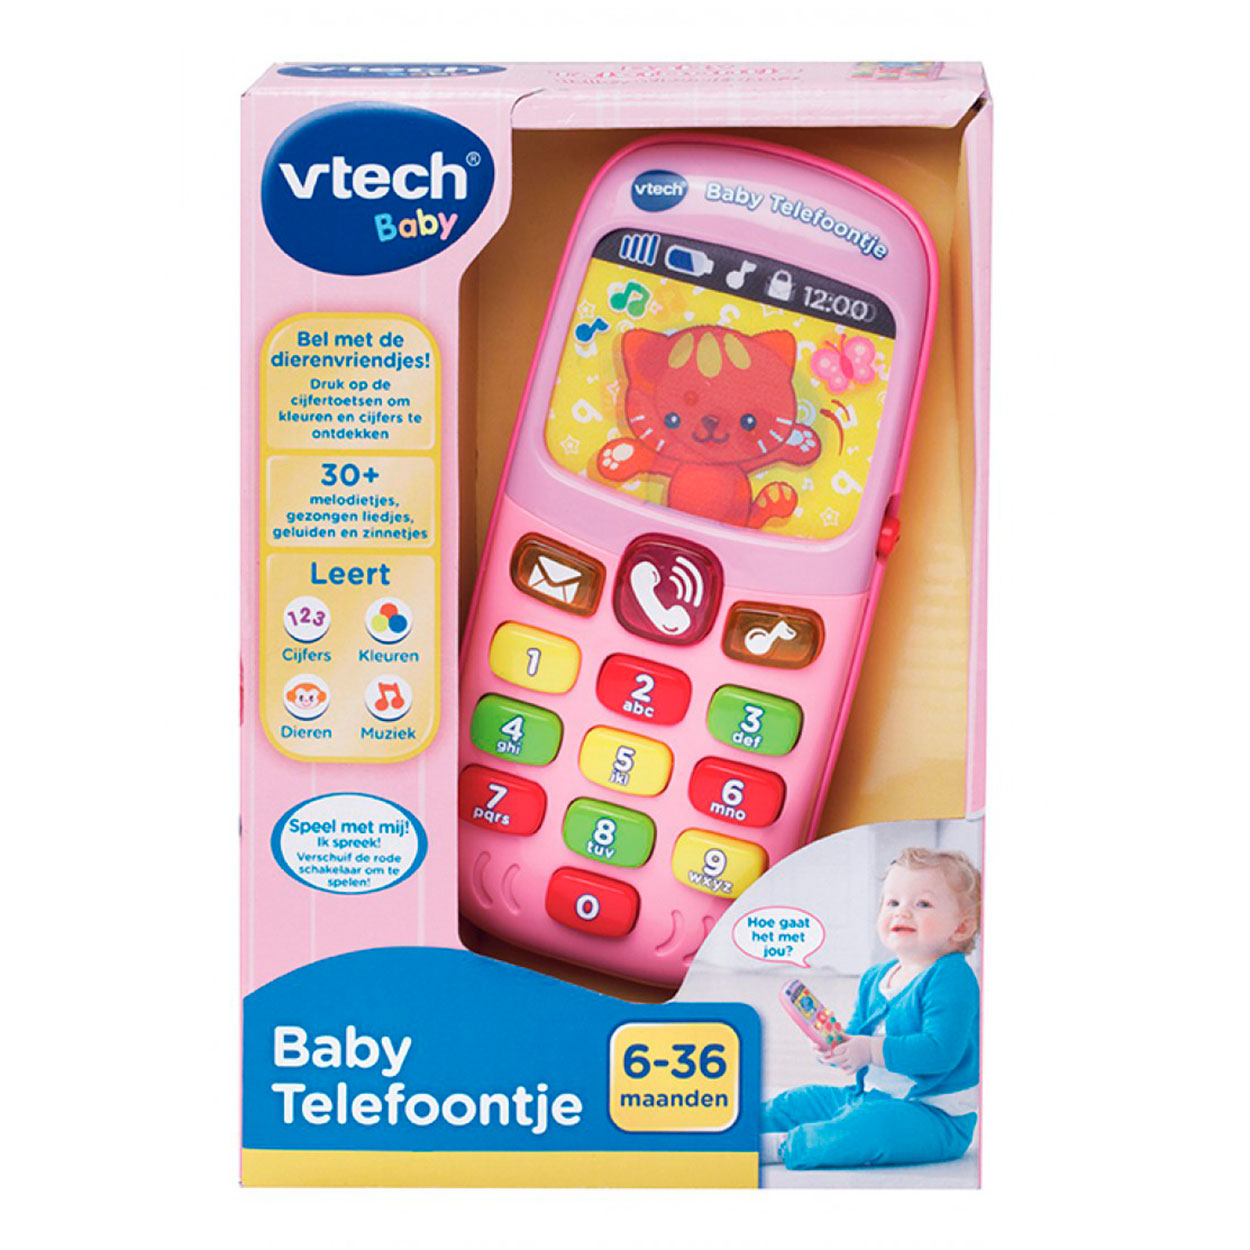 VTech - Téléphone interactif - Baby smartphone bilingue